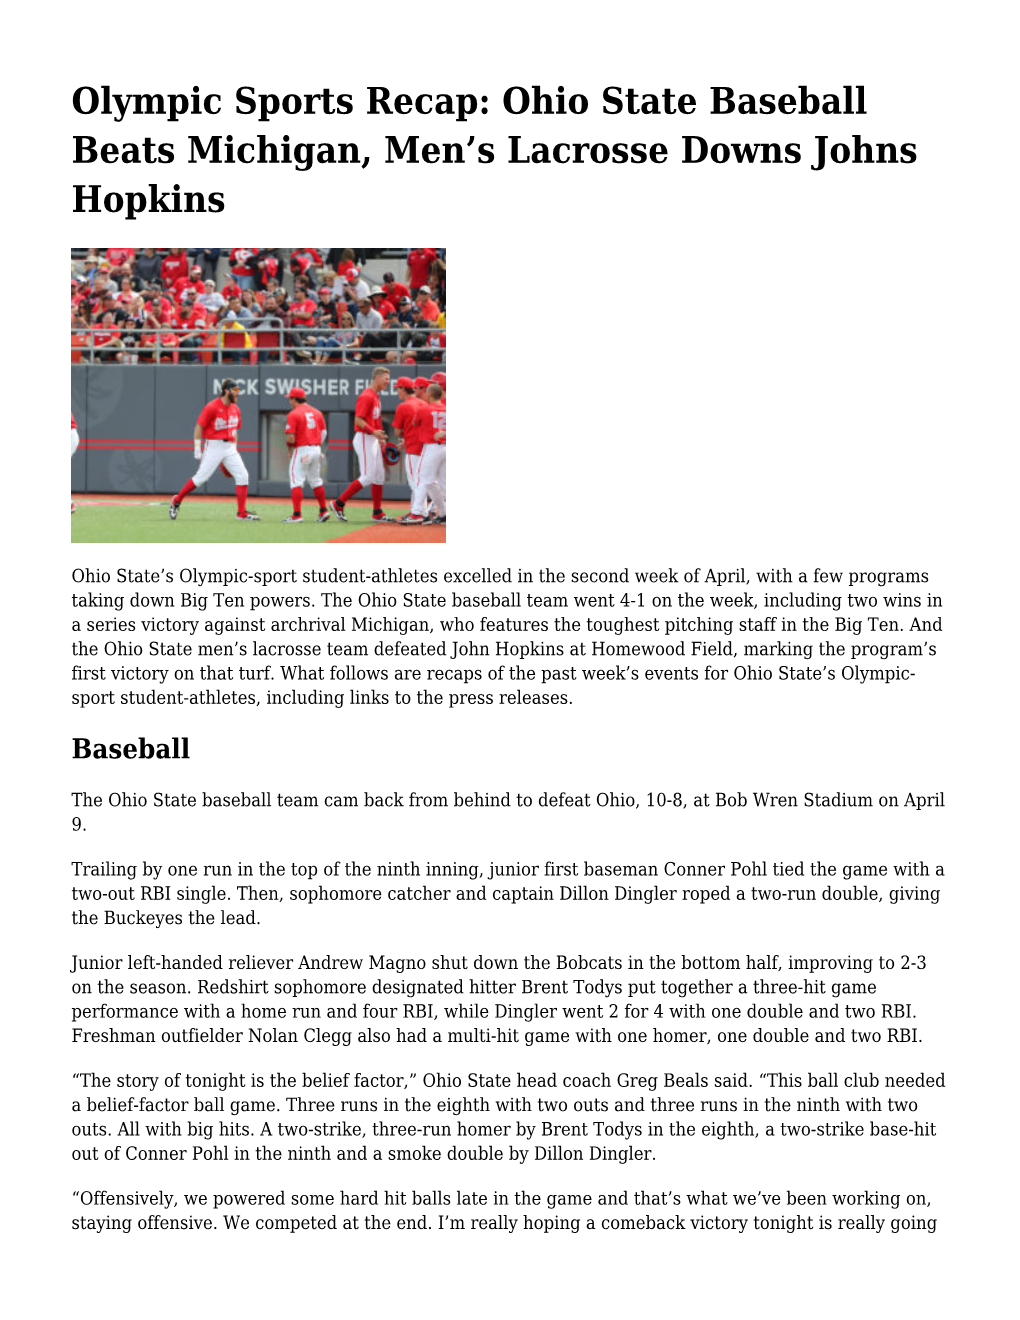 Olympic Sports Recap: Ohio State Baseball Beats Michigan, Men’S Lacrosse Downs Johns Hopkins